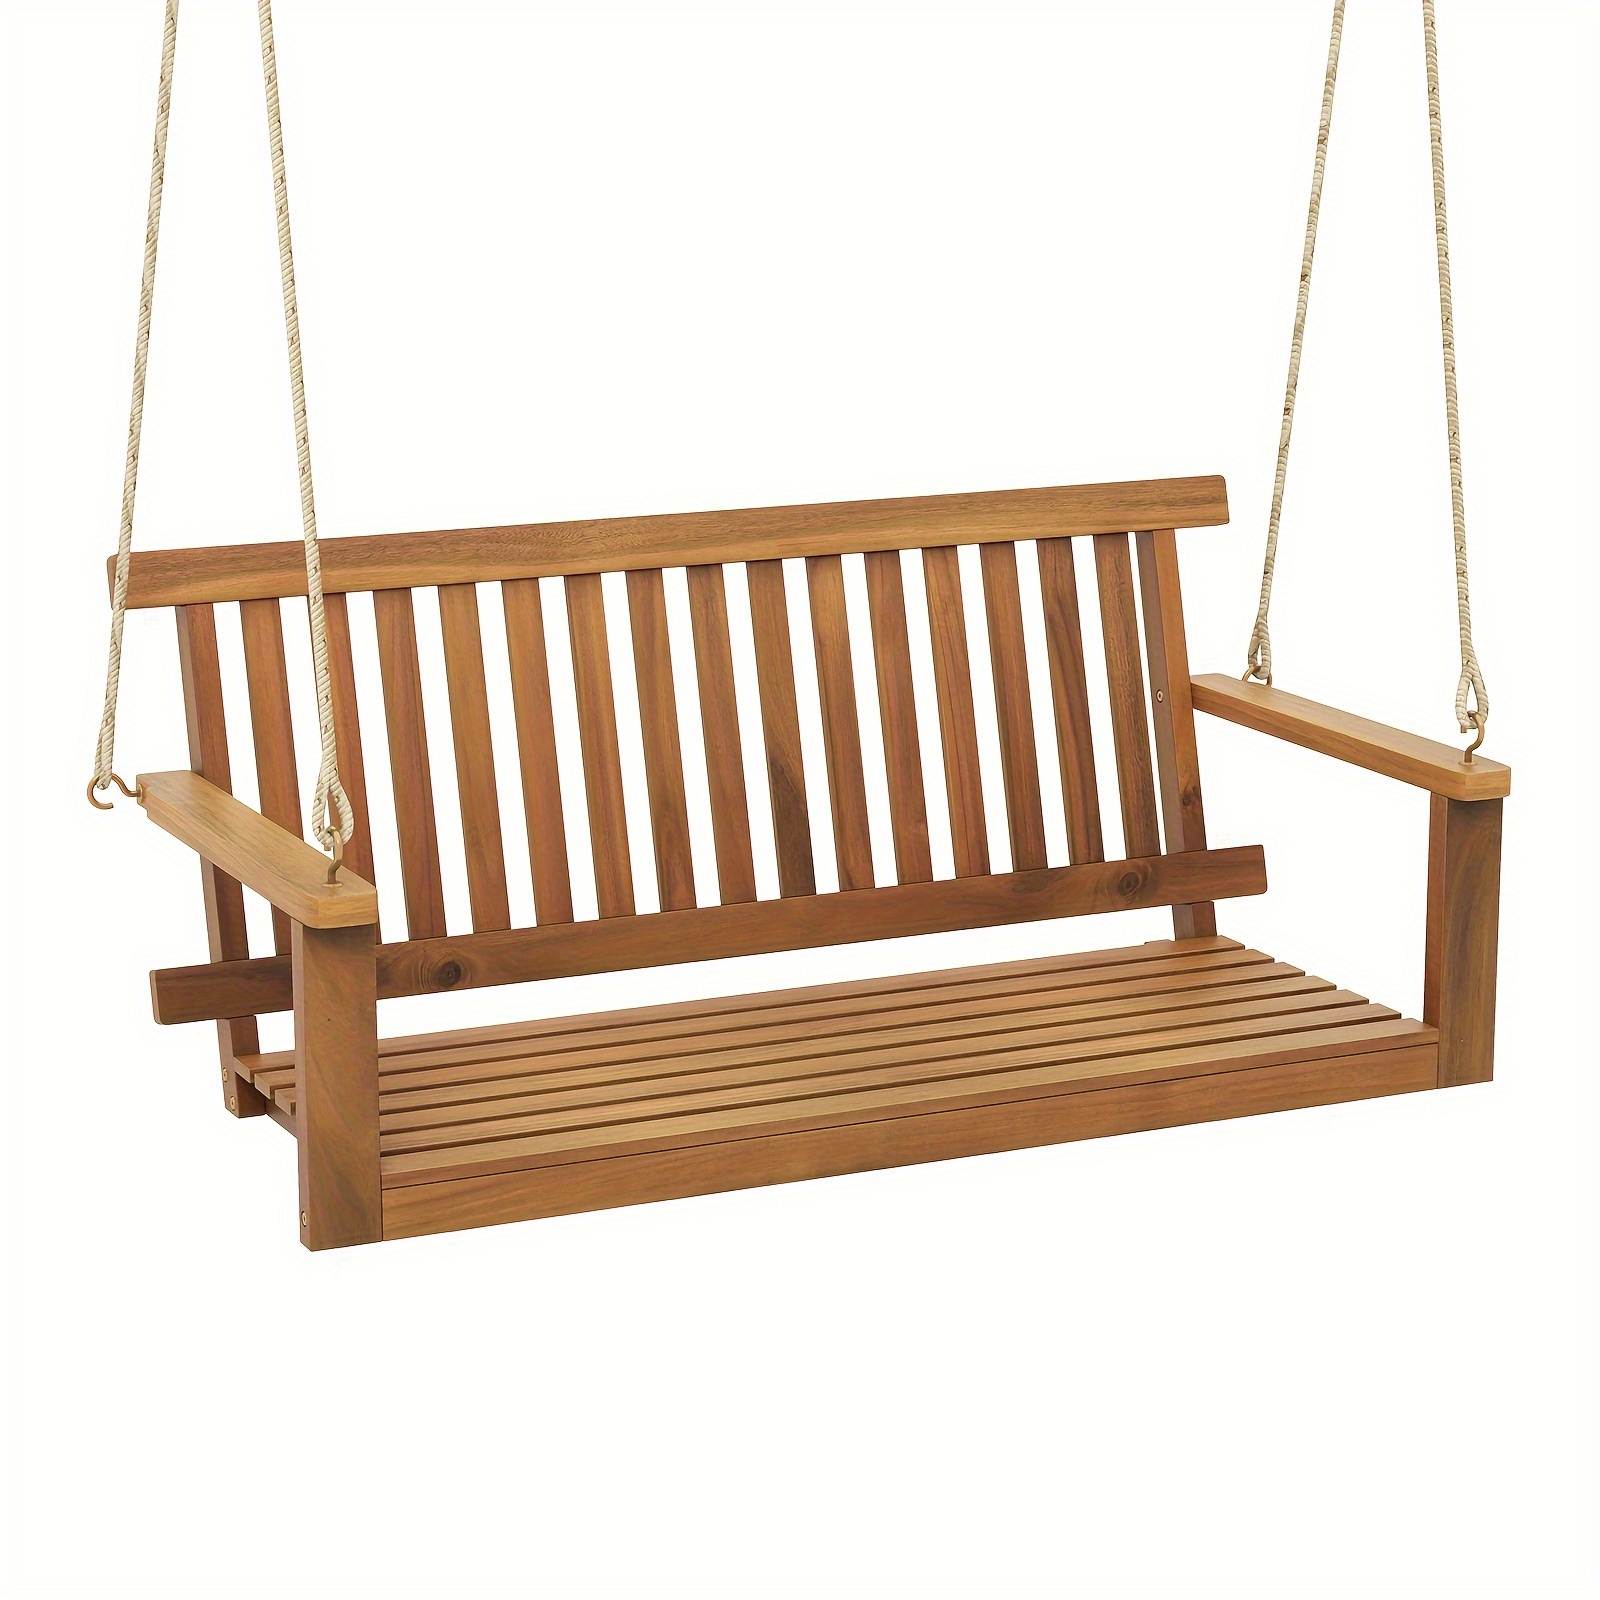 

2-seat Porch Swing Bench Acacia Wood Chair W/ 2 Hanging Hemp Ropes For Backyard